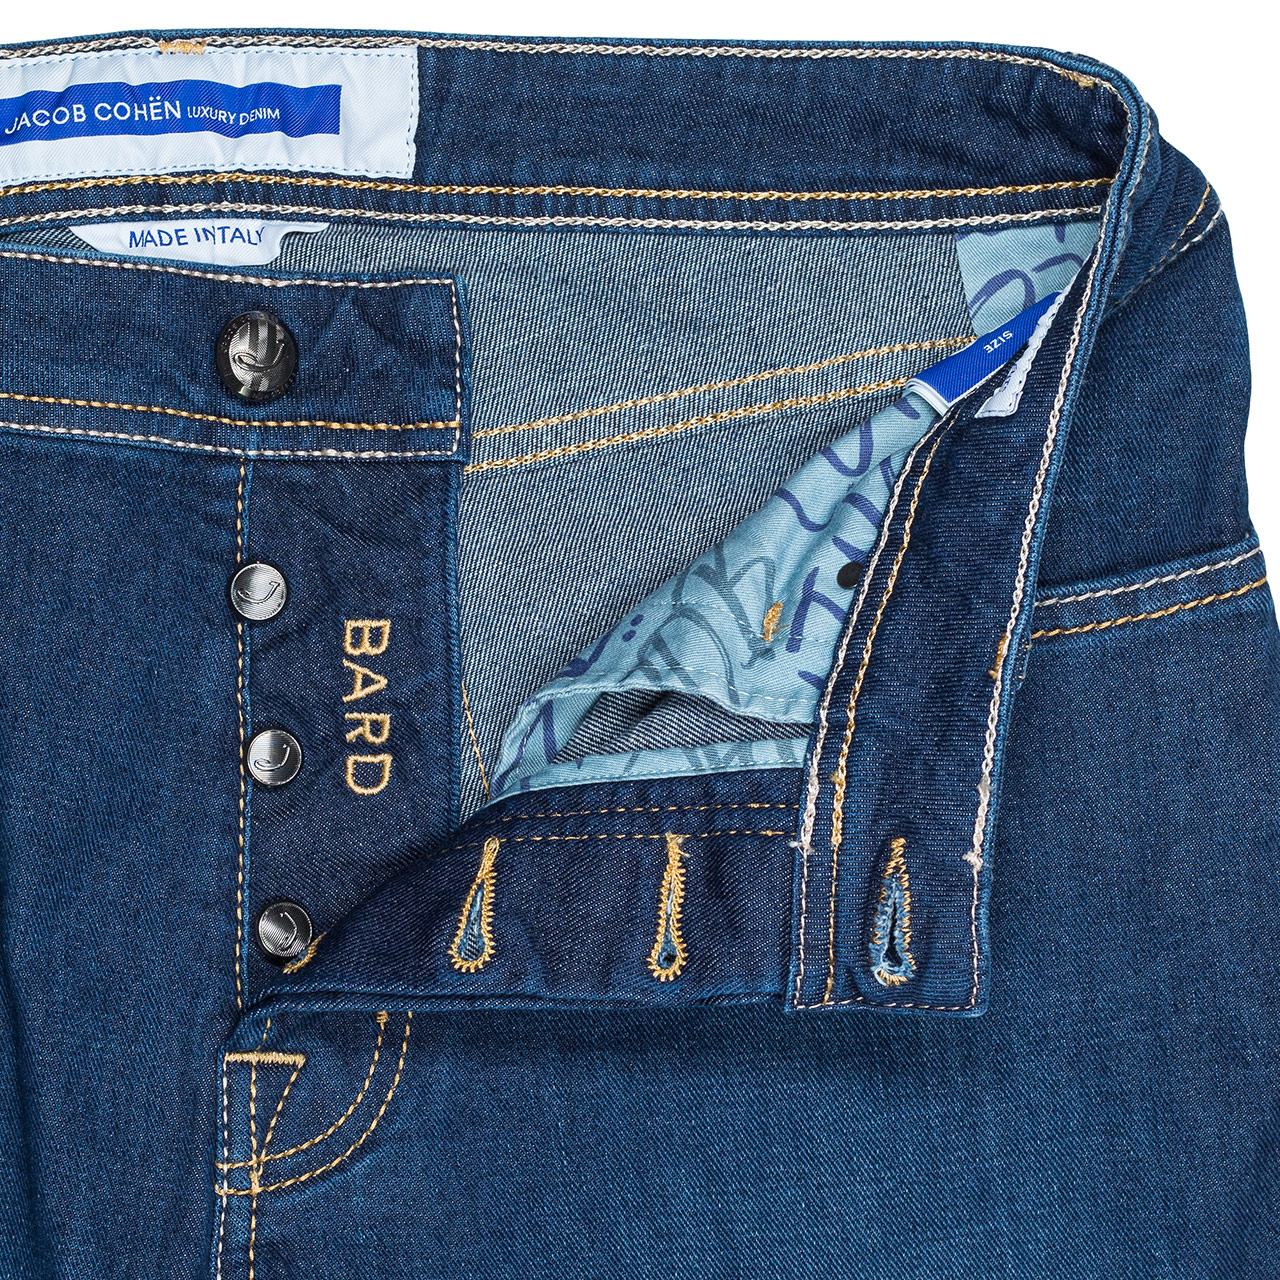 Jacob Cohen Jeans BARD "Rare Luxury" in blau mit roten Lederpatch